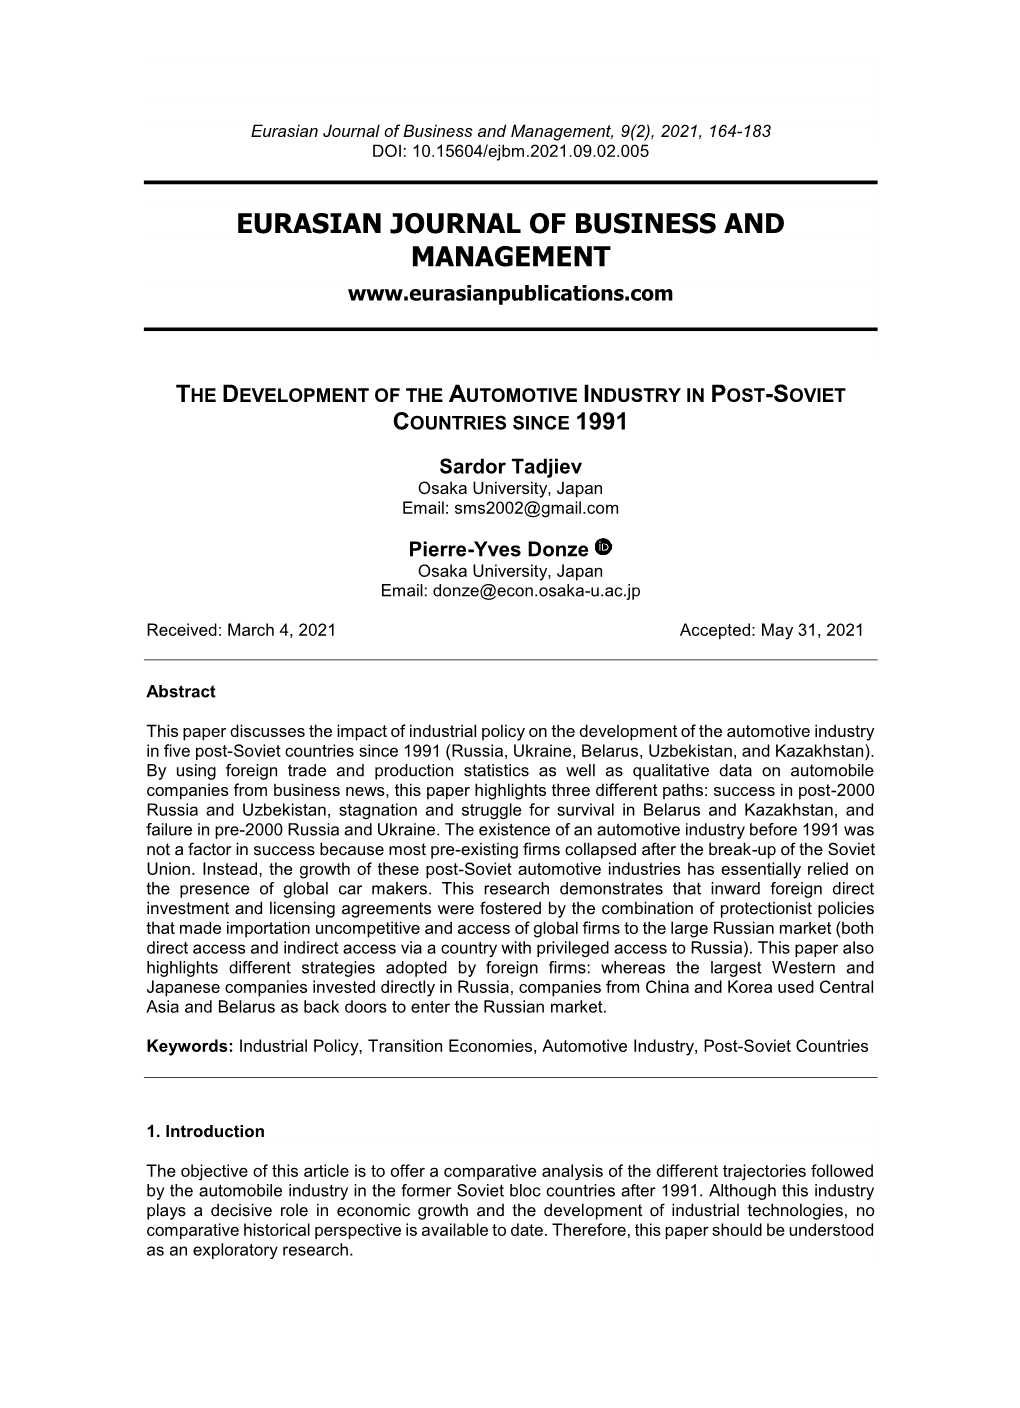 Eurasian Journal of Business and Management, 9(2), 2021, 164-183 DOI: 10.15604/Ejbm.2021.09.02.005